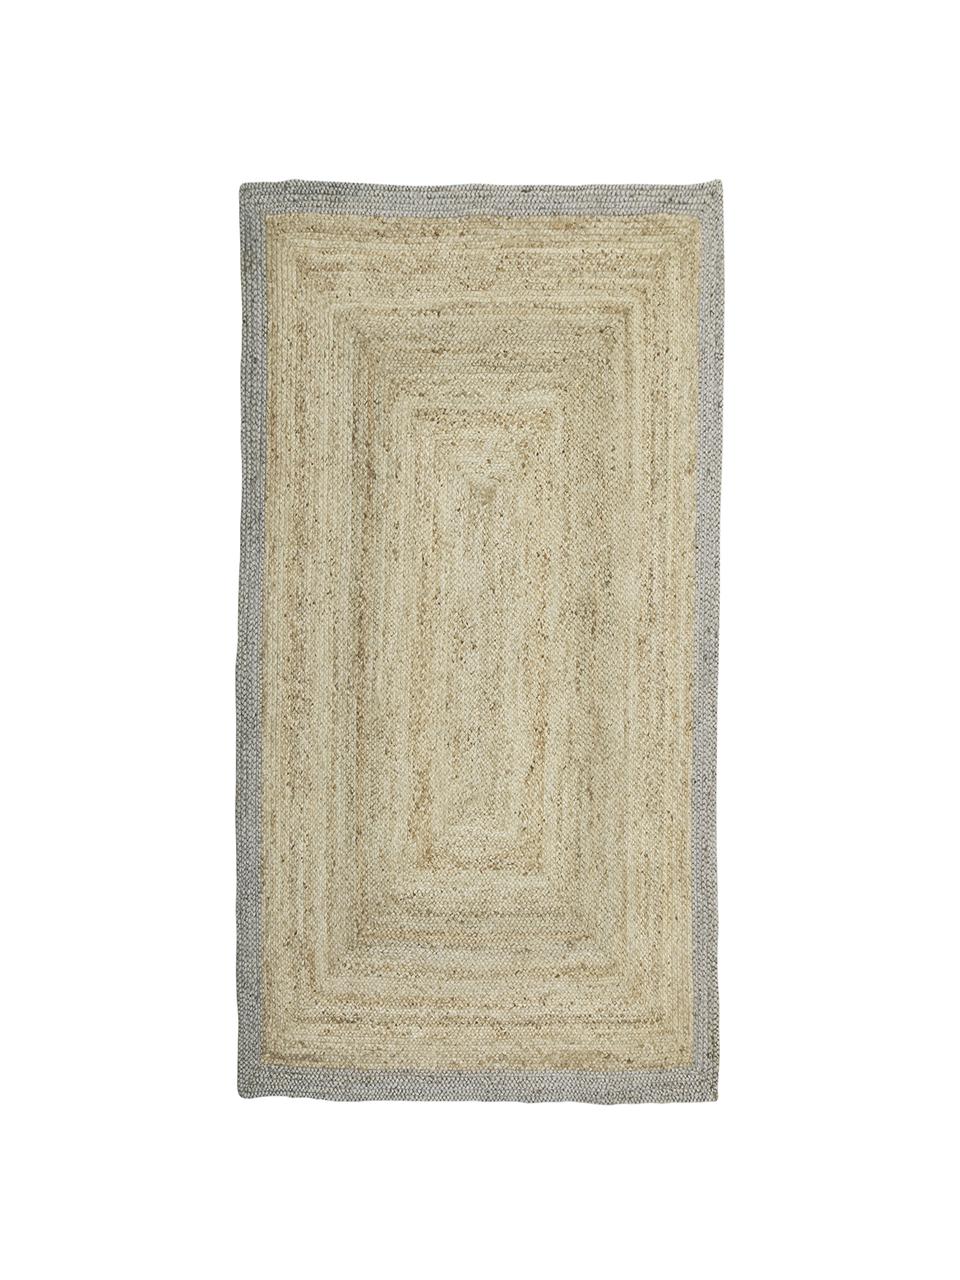 Handgefertigter Jute-Teppich Shanta mit grauem Rand, 100% Jute, Beige, Grau, B 120 x L 180 cm (Größe S)